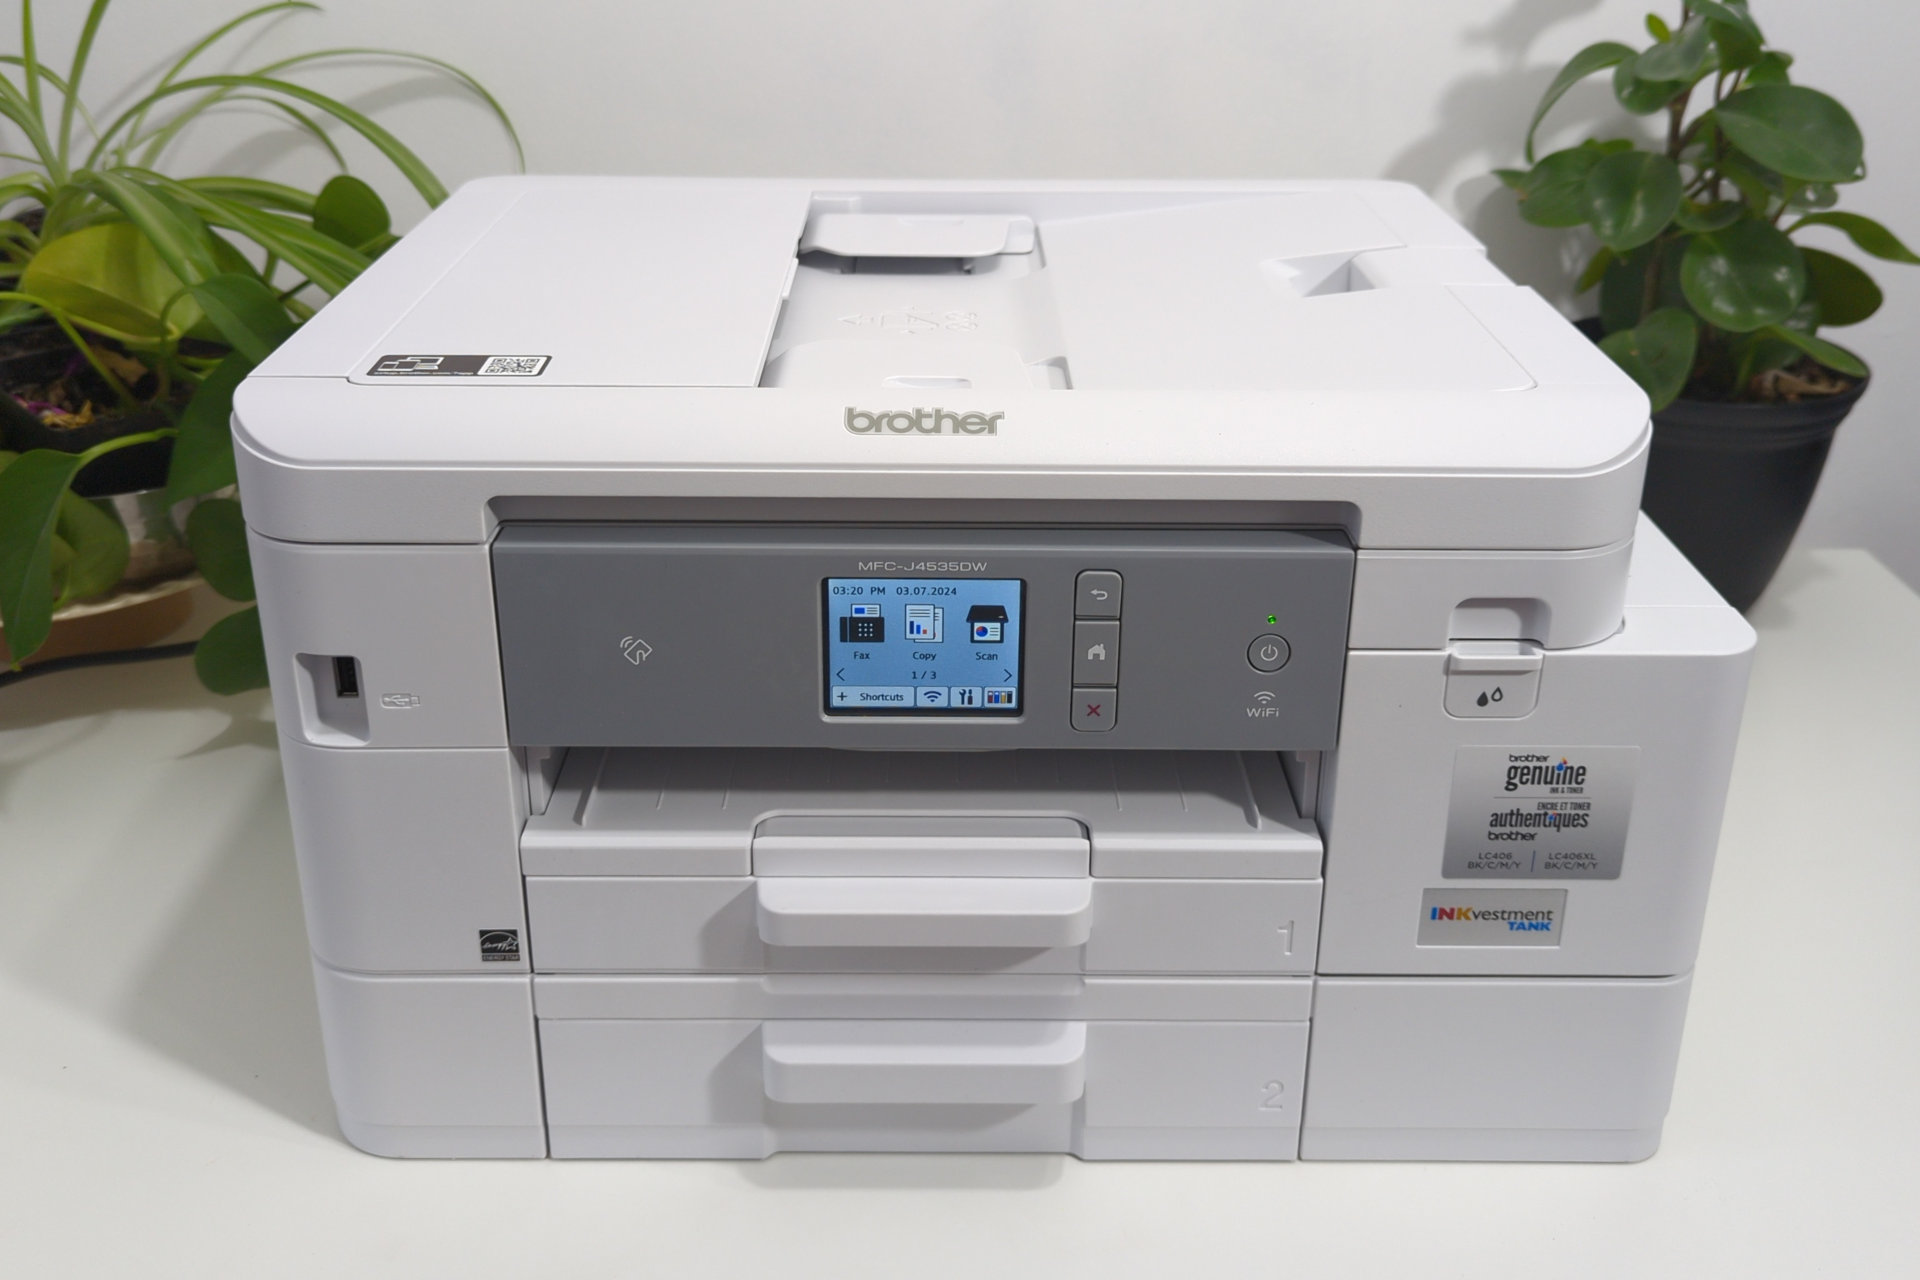 Brother MFC-J4535DW یک چاپگر فشرده چند منظوره INKvestment است.